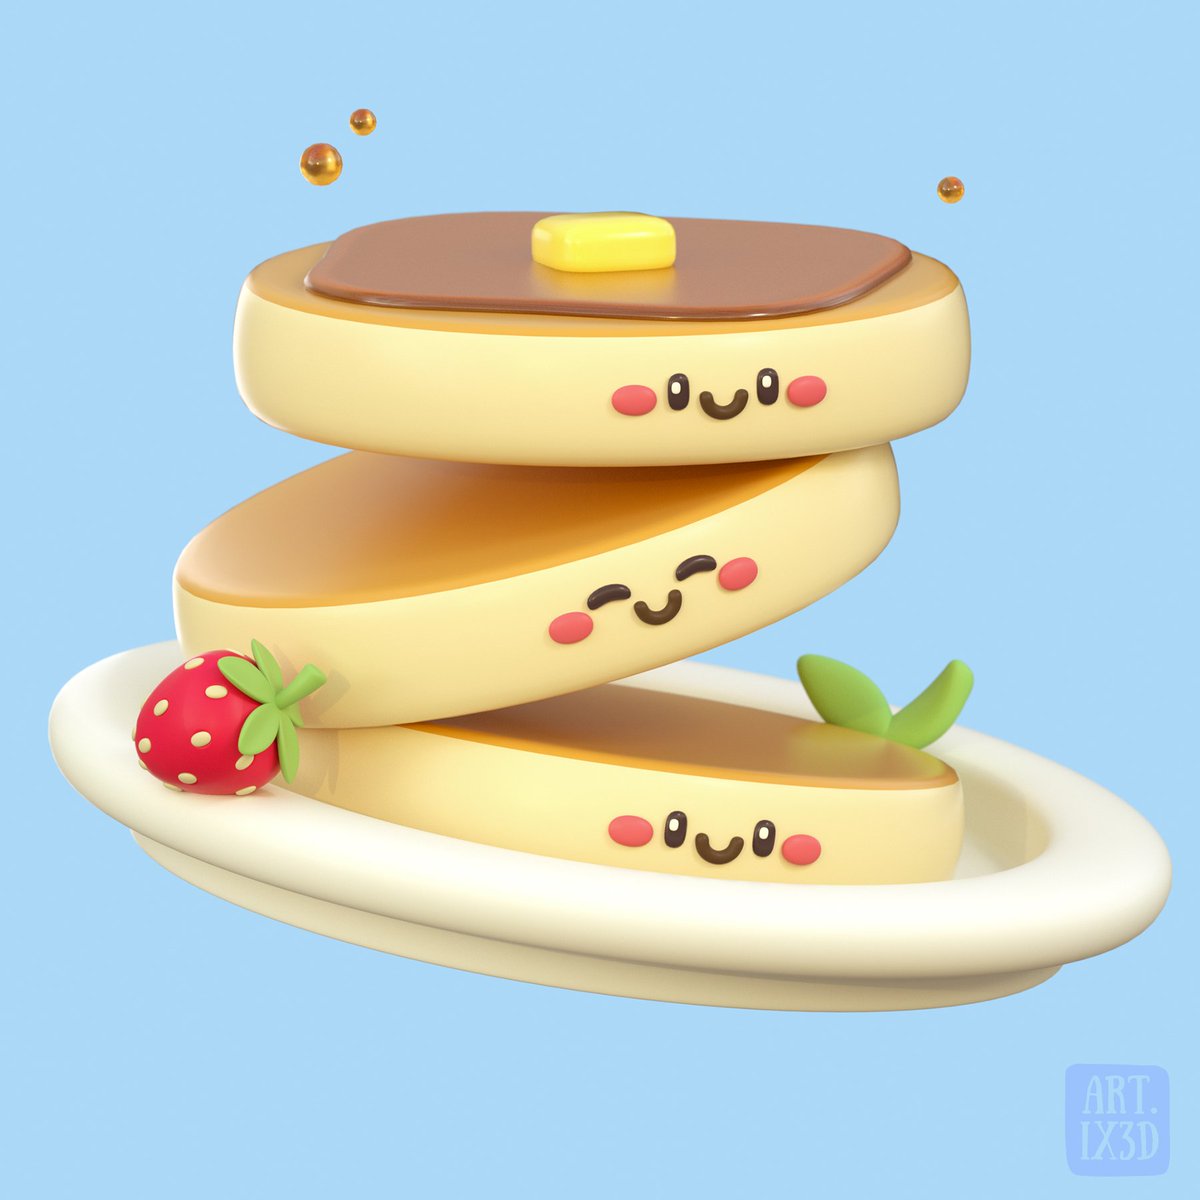 Z- Pancakes 🥞

#3D #3dart  #illustration #cute #C4D #36days_z #Font #typography #36DaysOfType